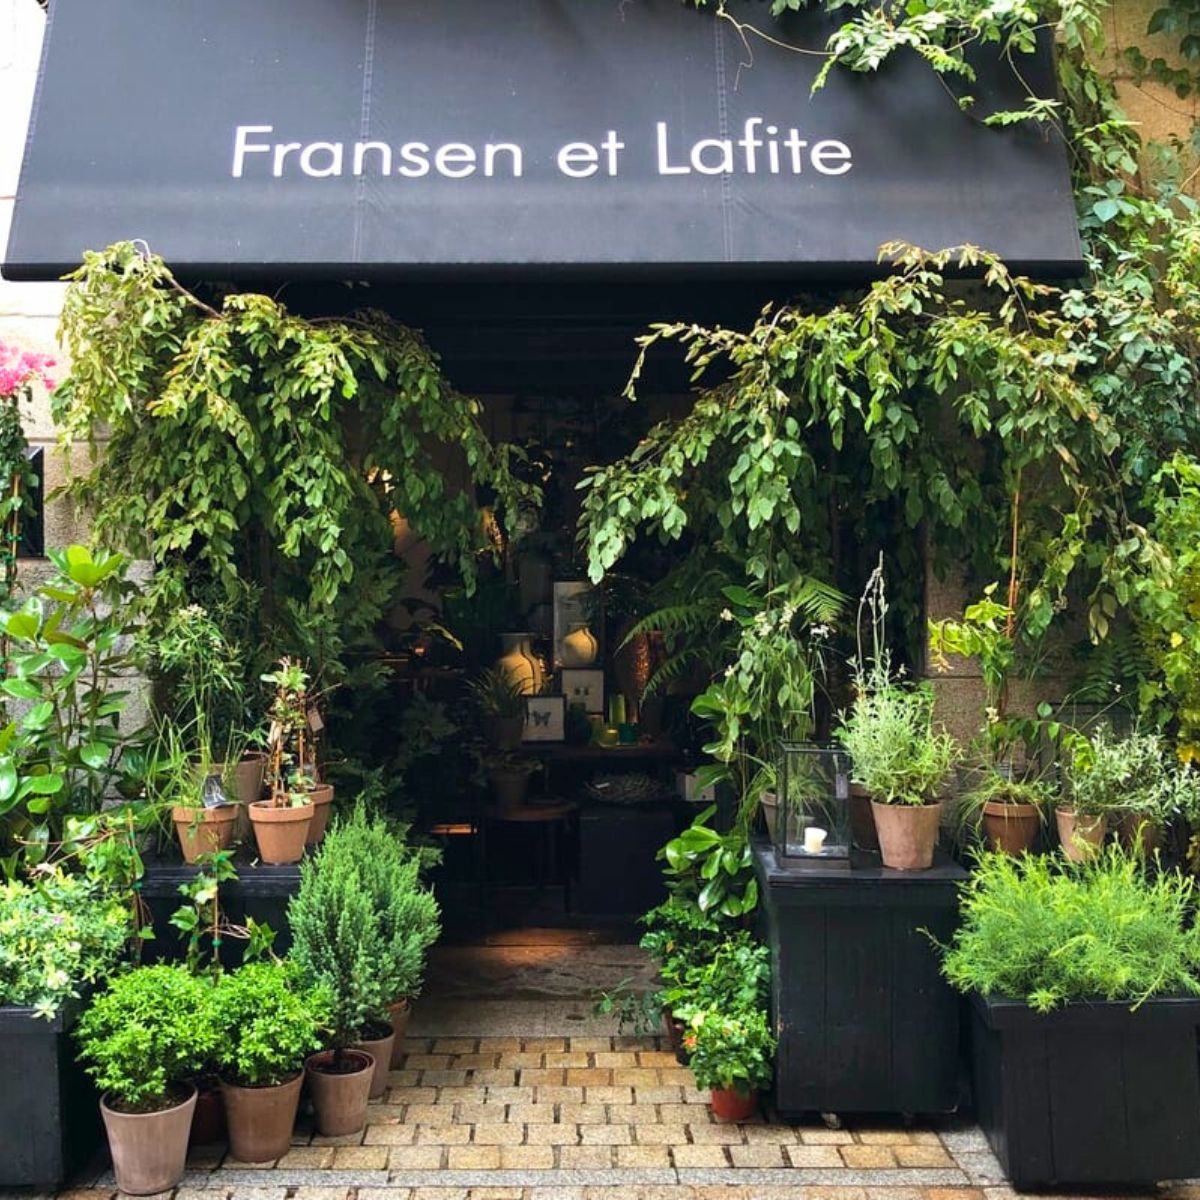 Fransen Et Lafite flower and plant shop in Madrid